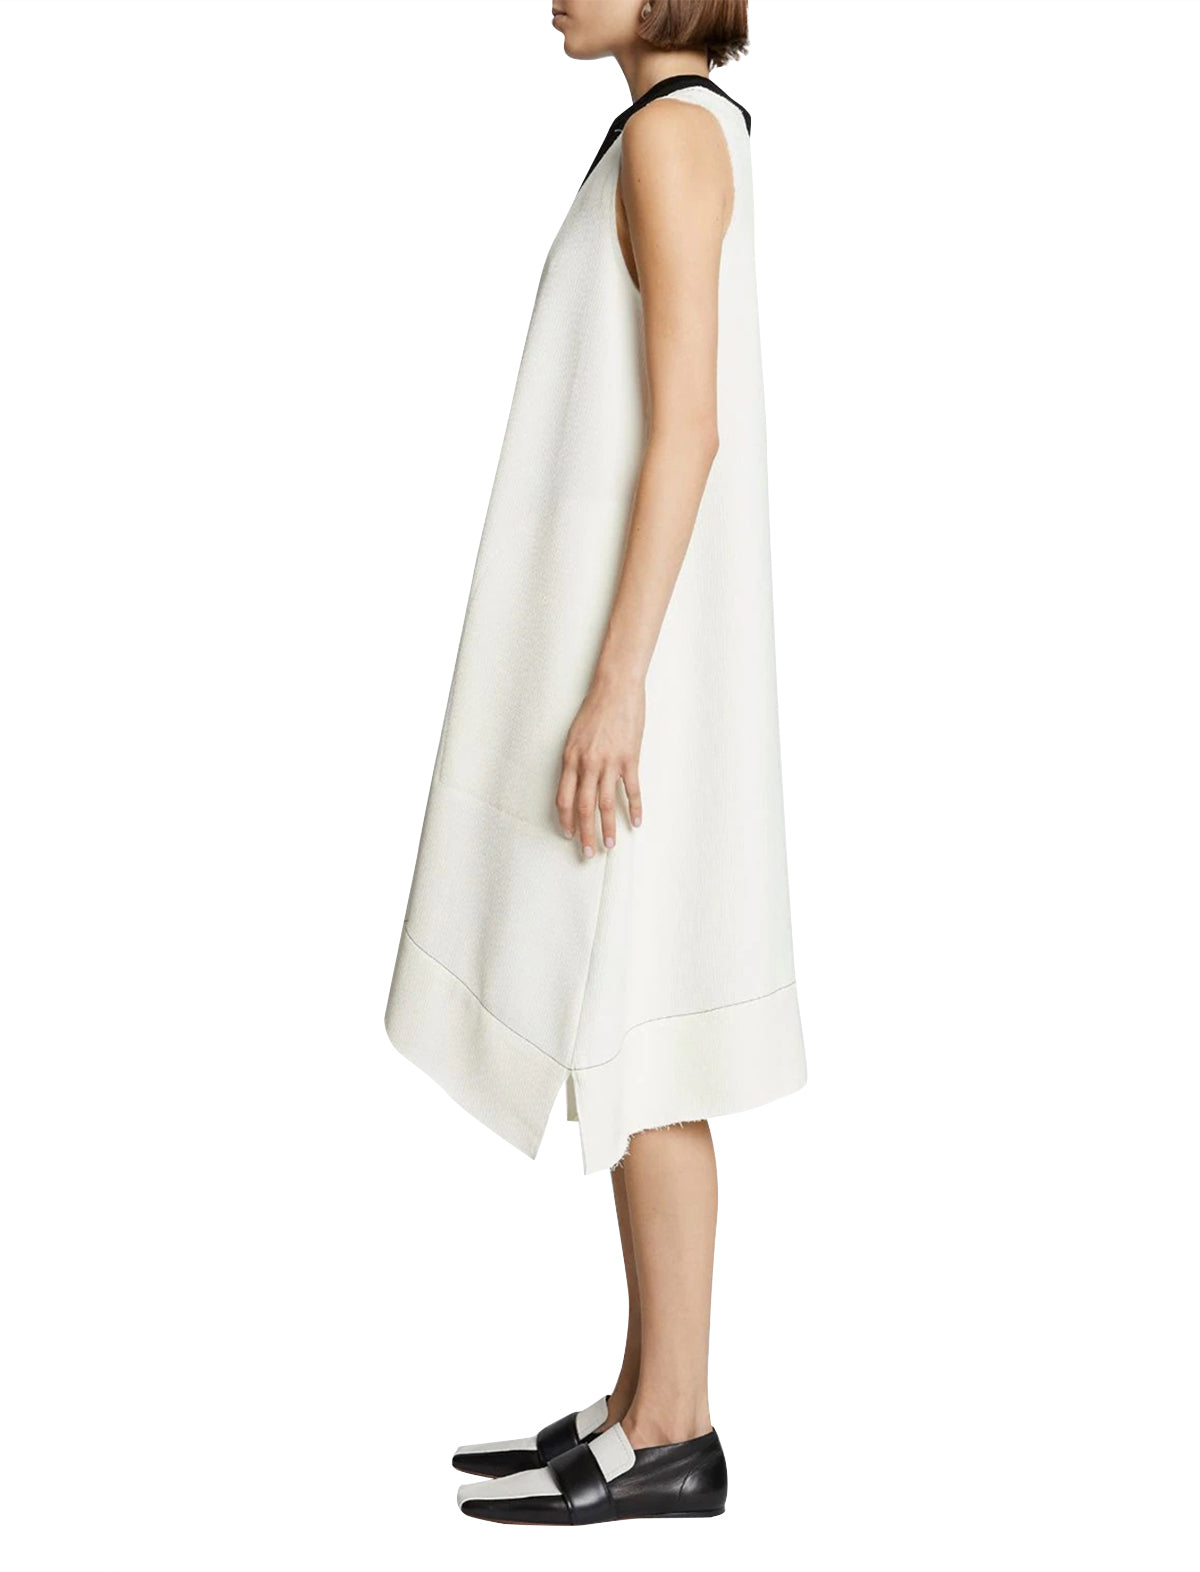 PROENZA SCHOULER WHITE LABEL Ribbed Bi-Color Dress in White